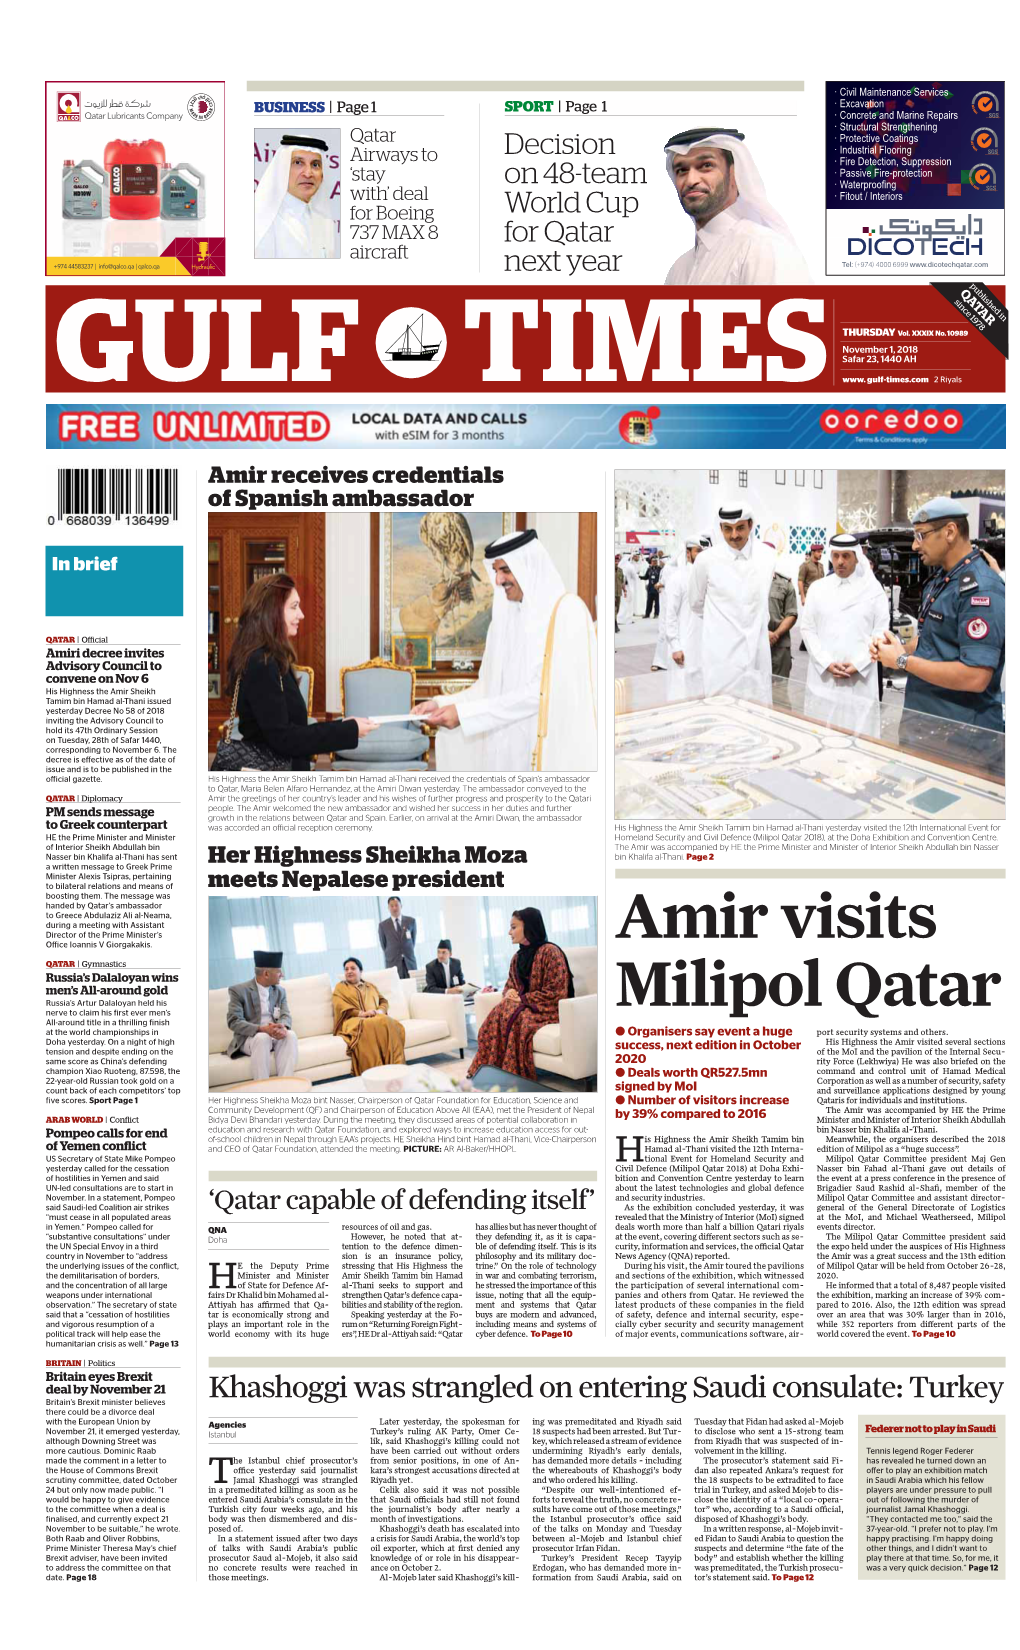 Amir Visits Milipol Qatar 2018